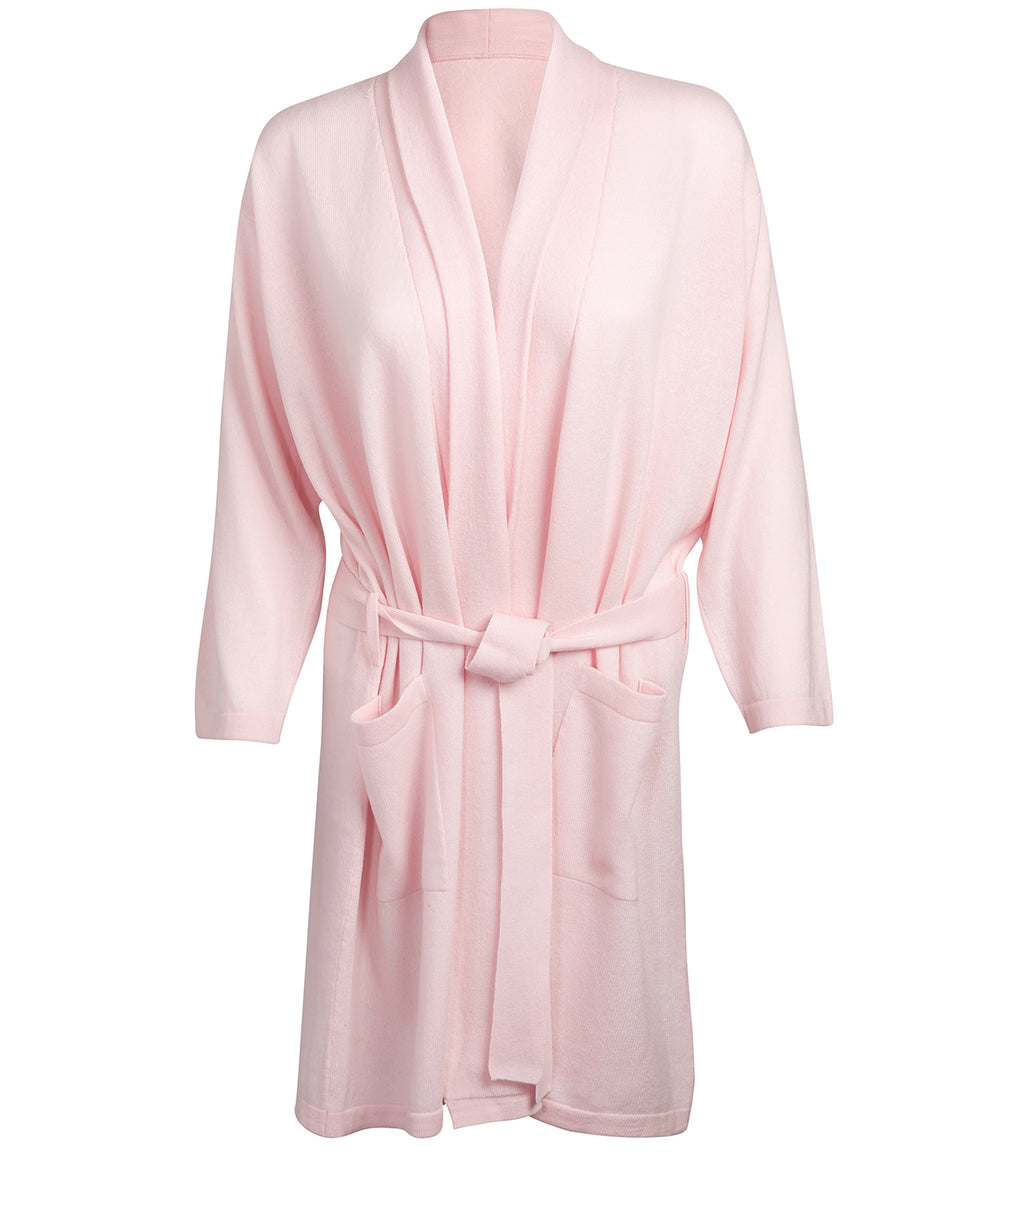 John Lewis Fleece Satin Trim Dressing Gown, Blush Pink | Gowns dresses,  Cozy dressing gown, Pink dressing gown